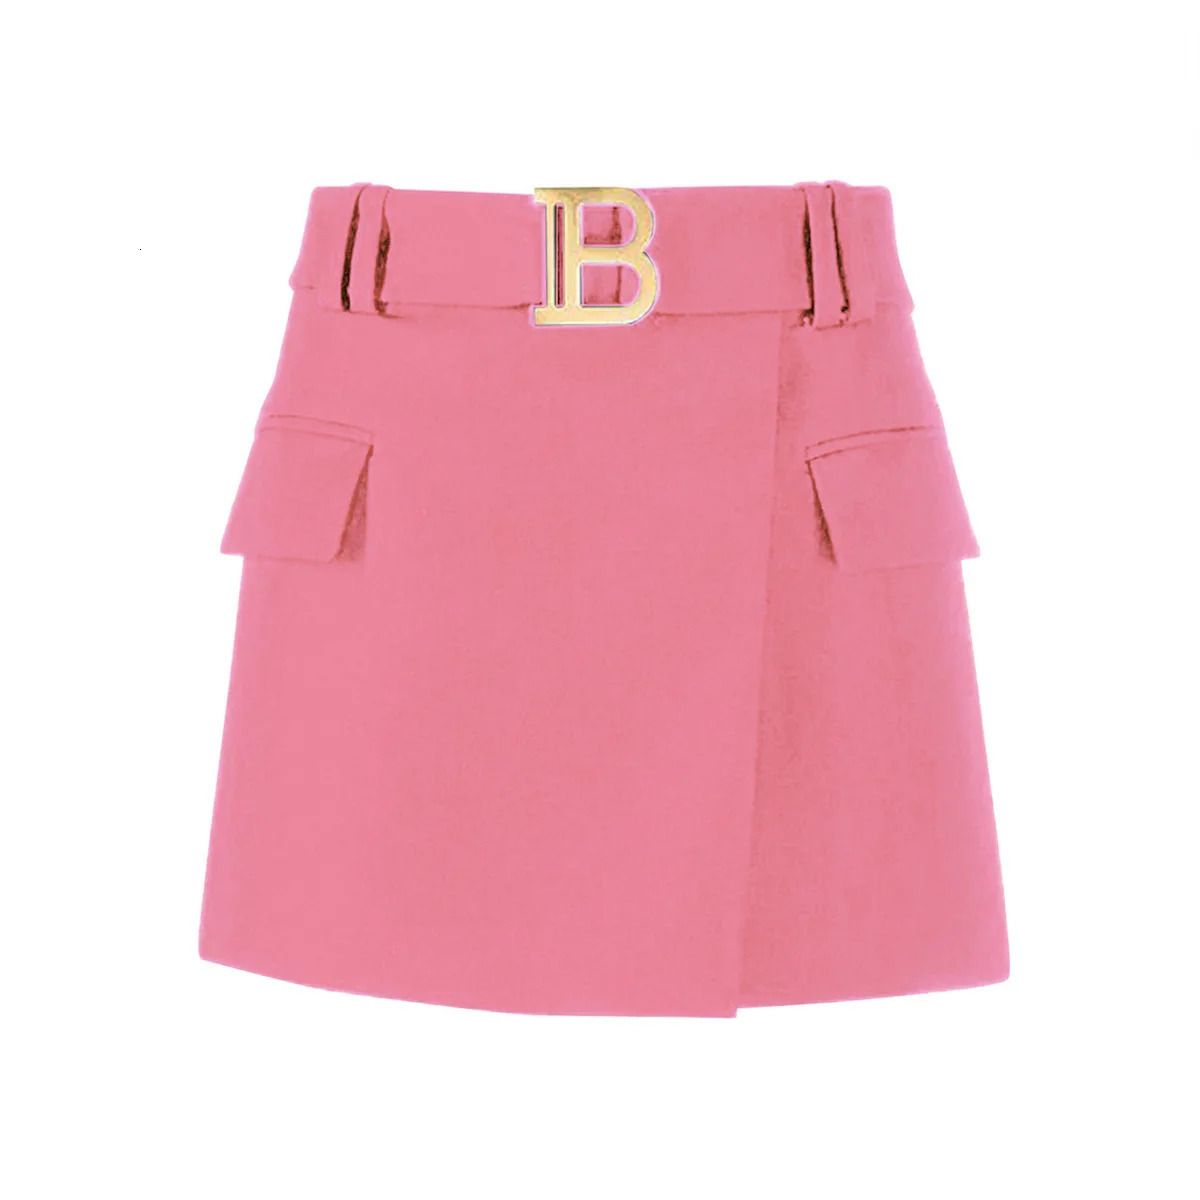 Pink skirt1